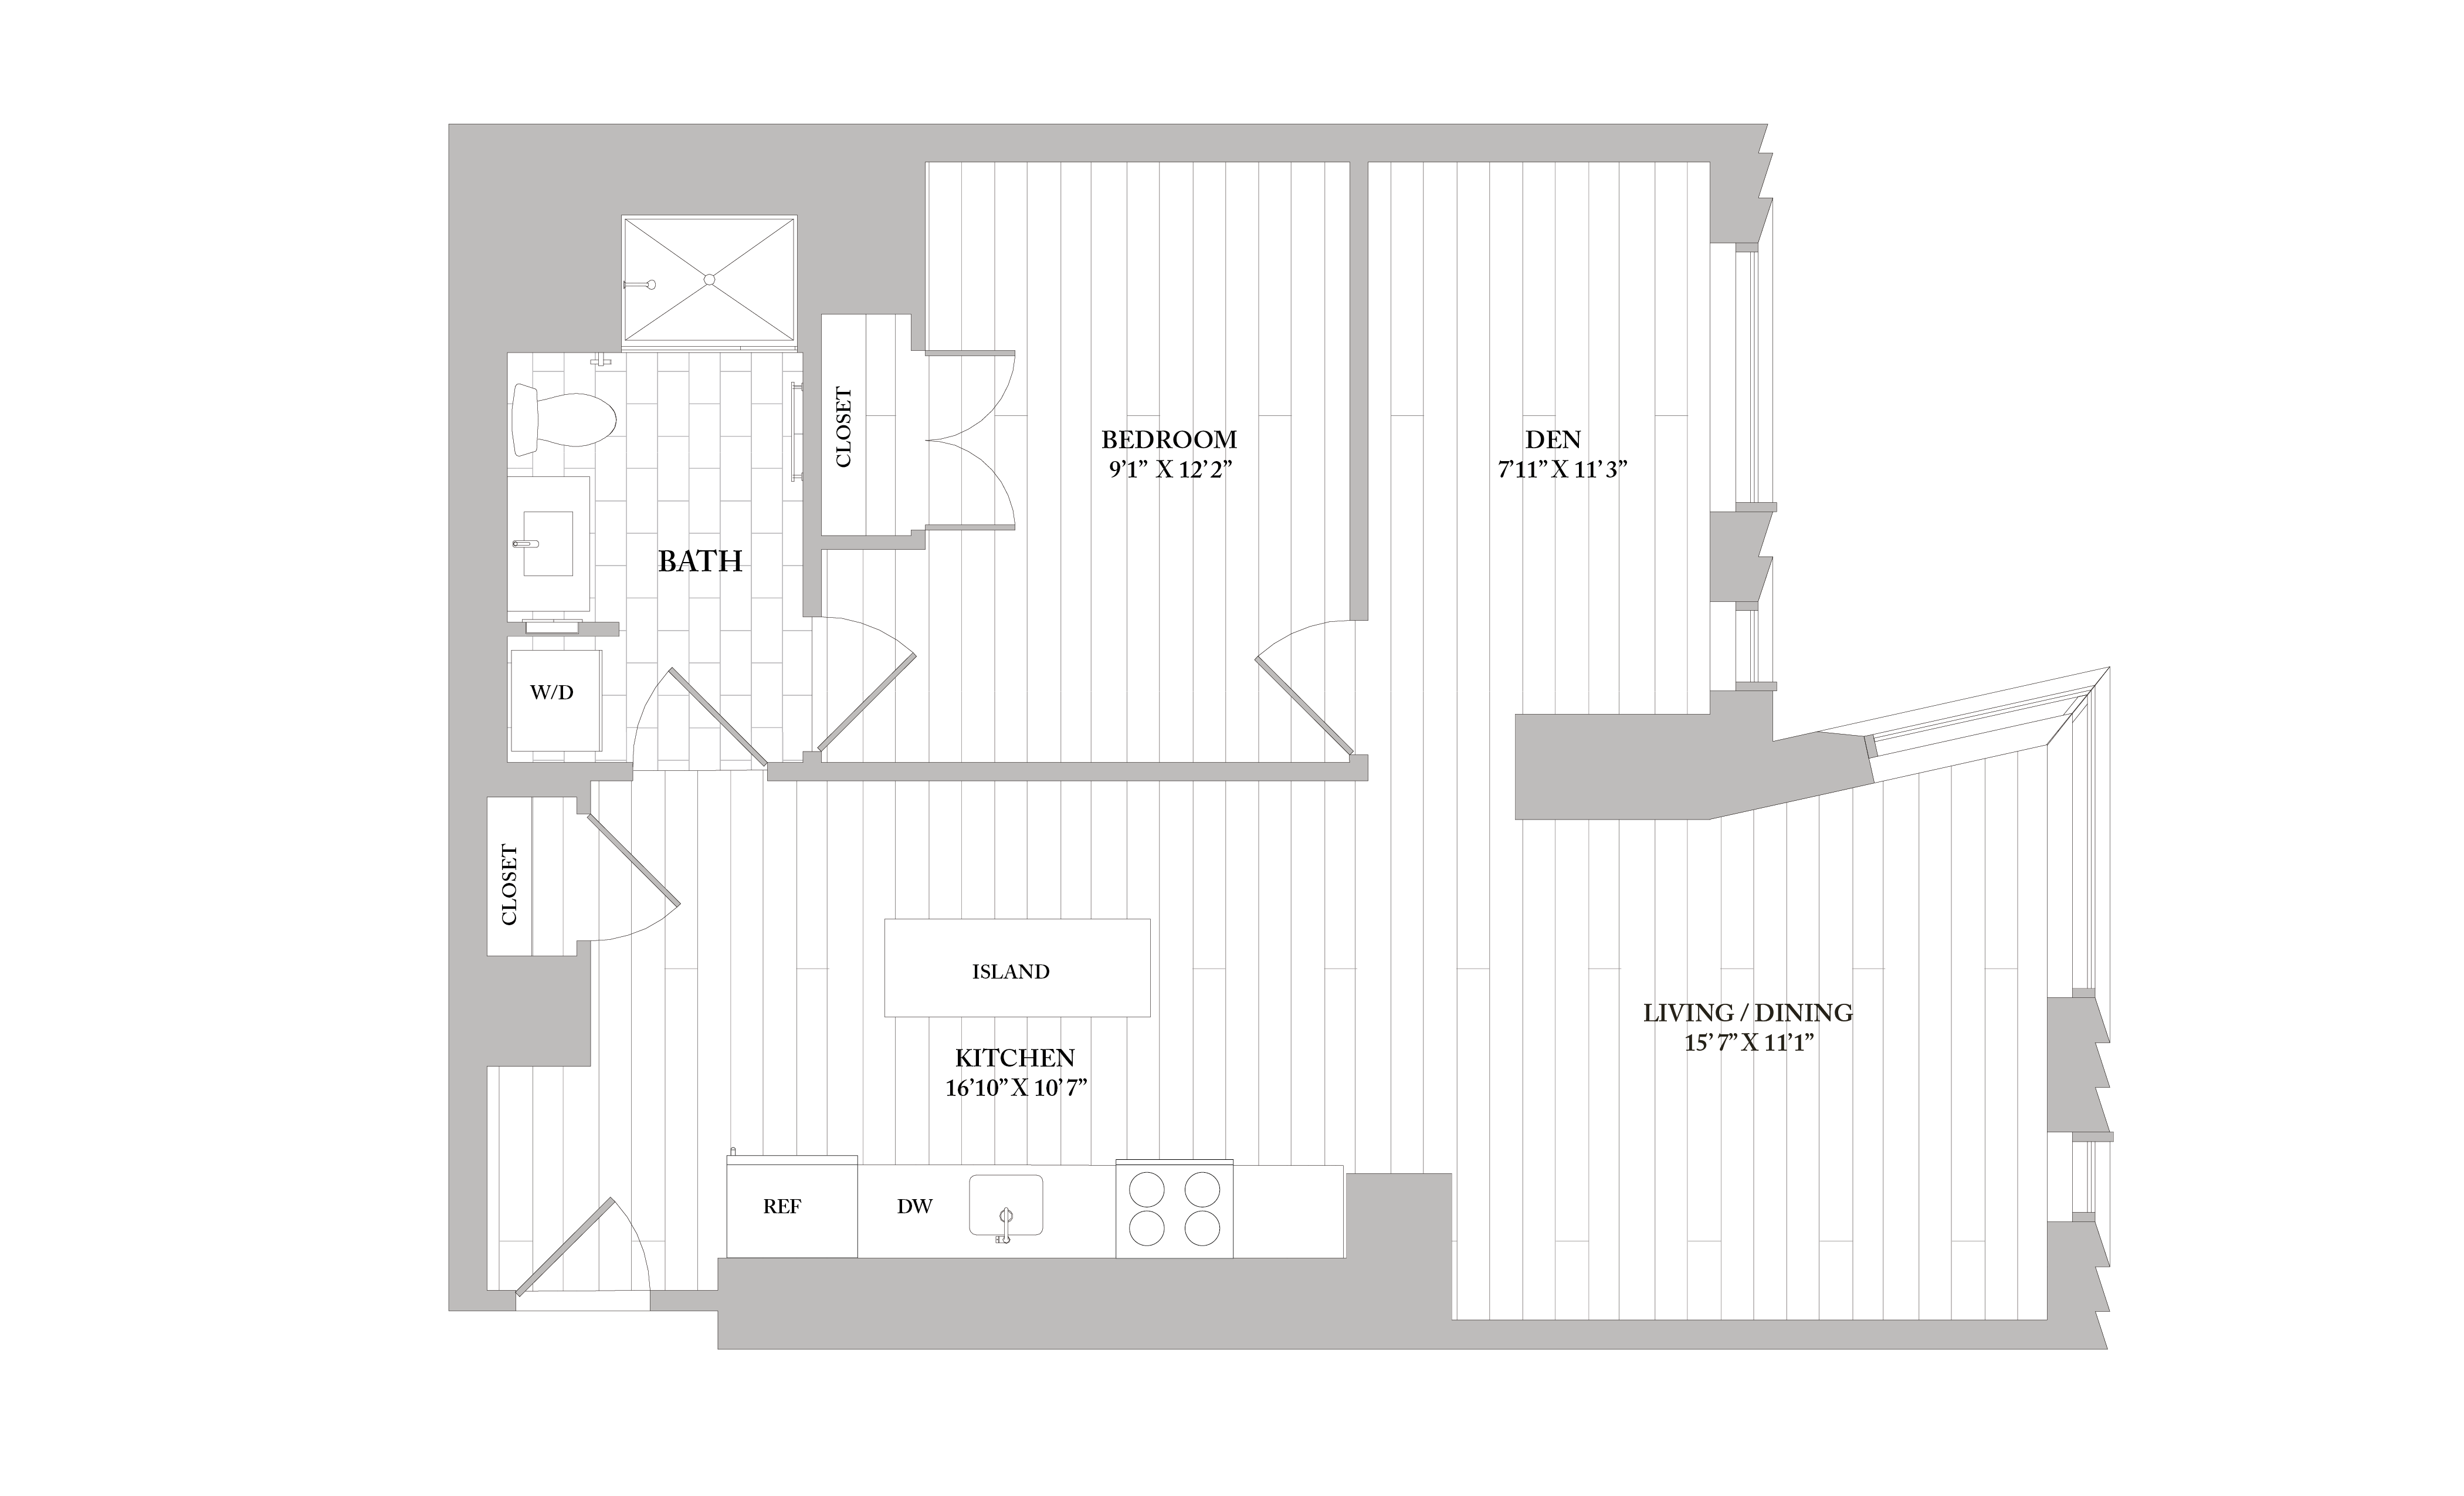 Apartment 1701 enlarge view